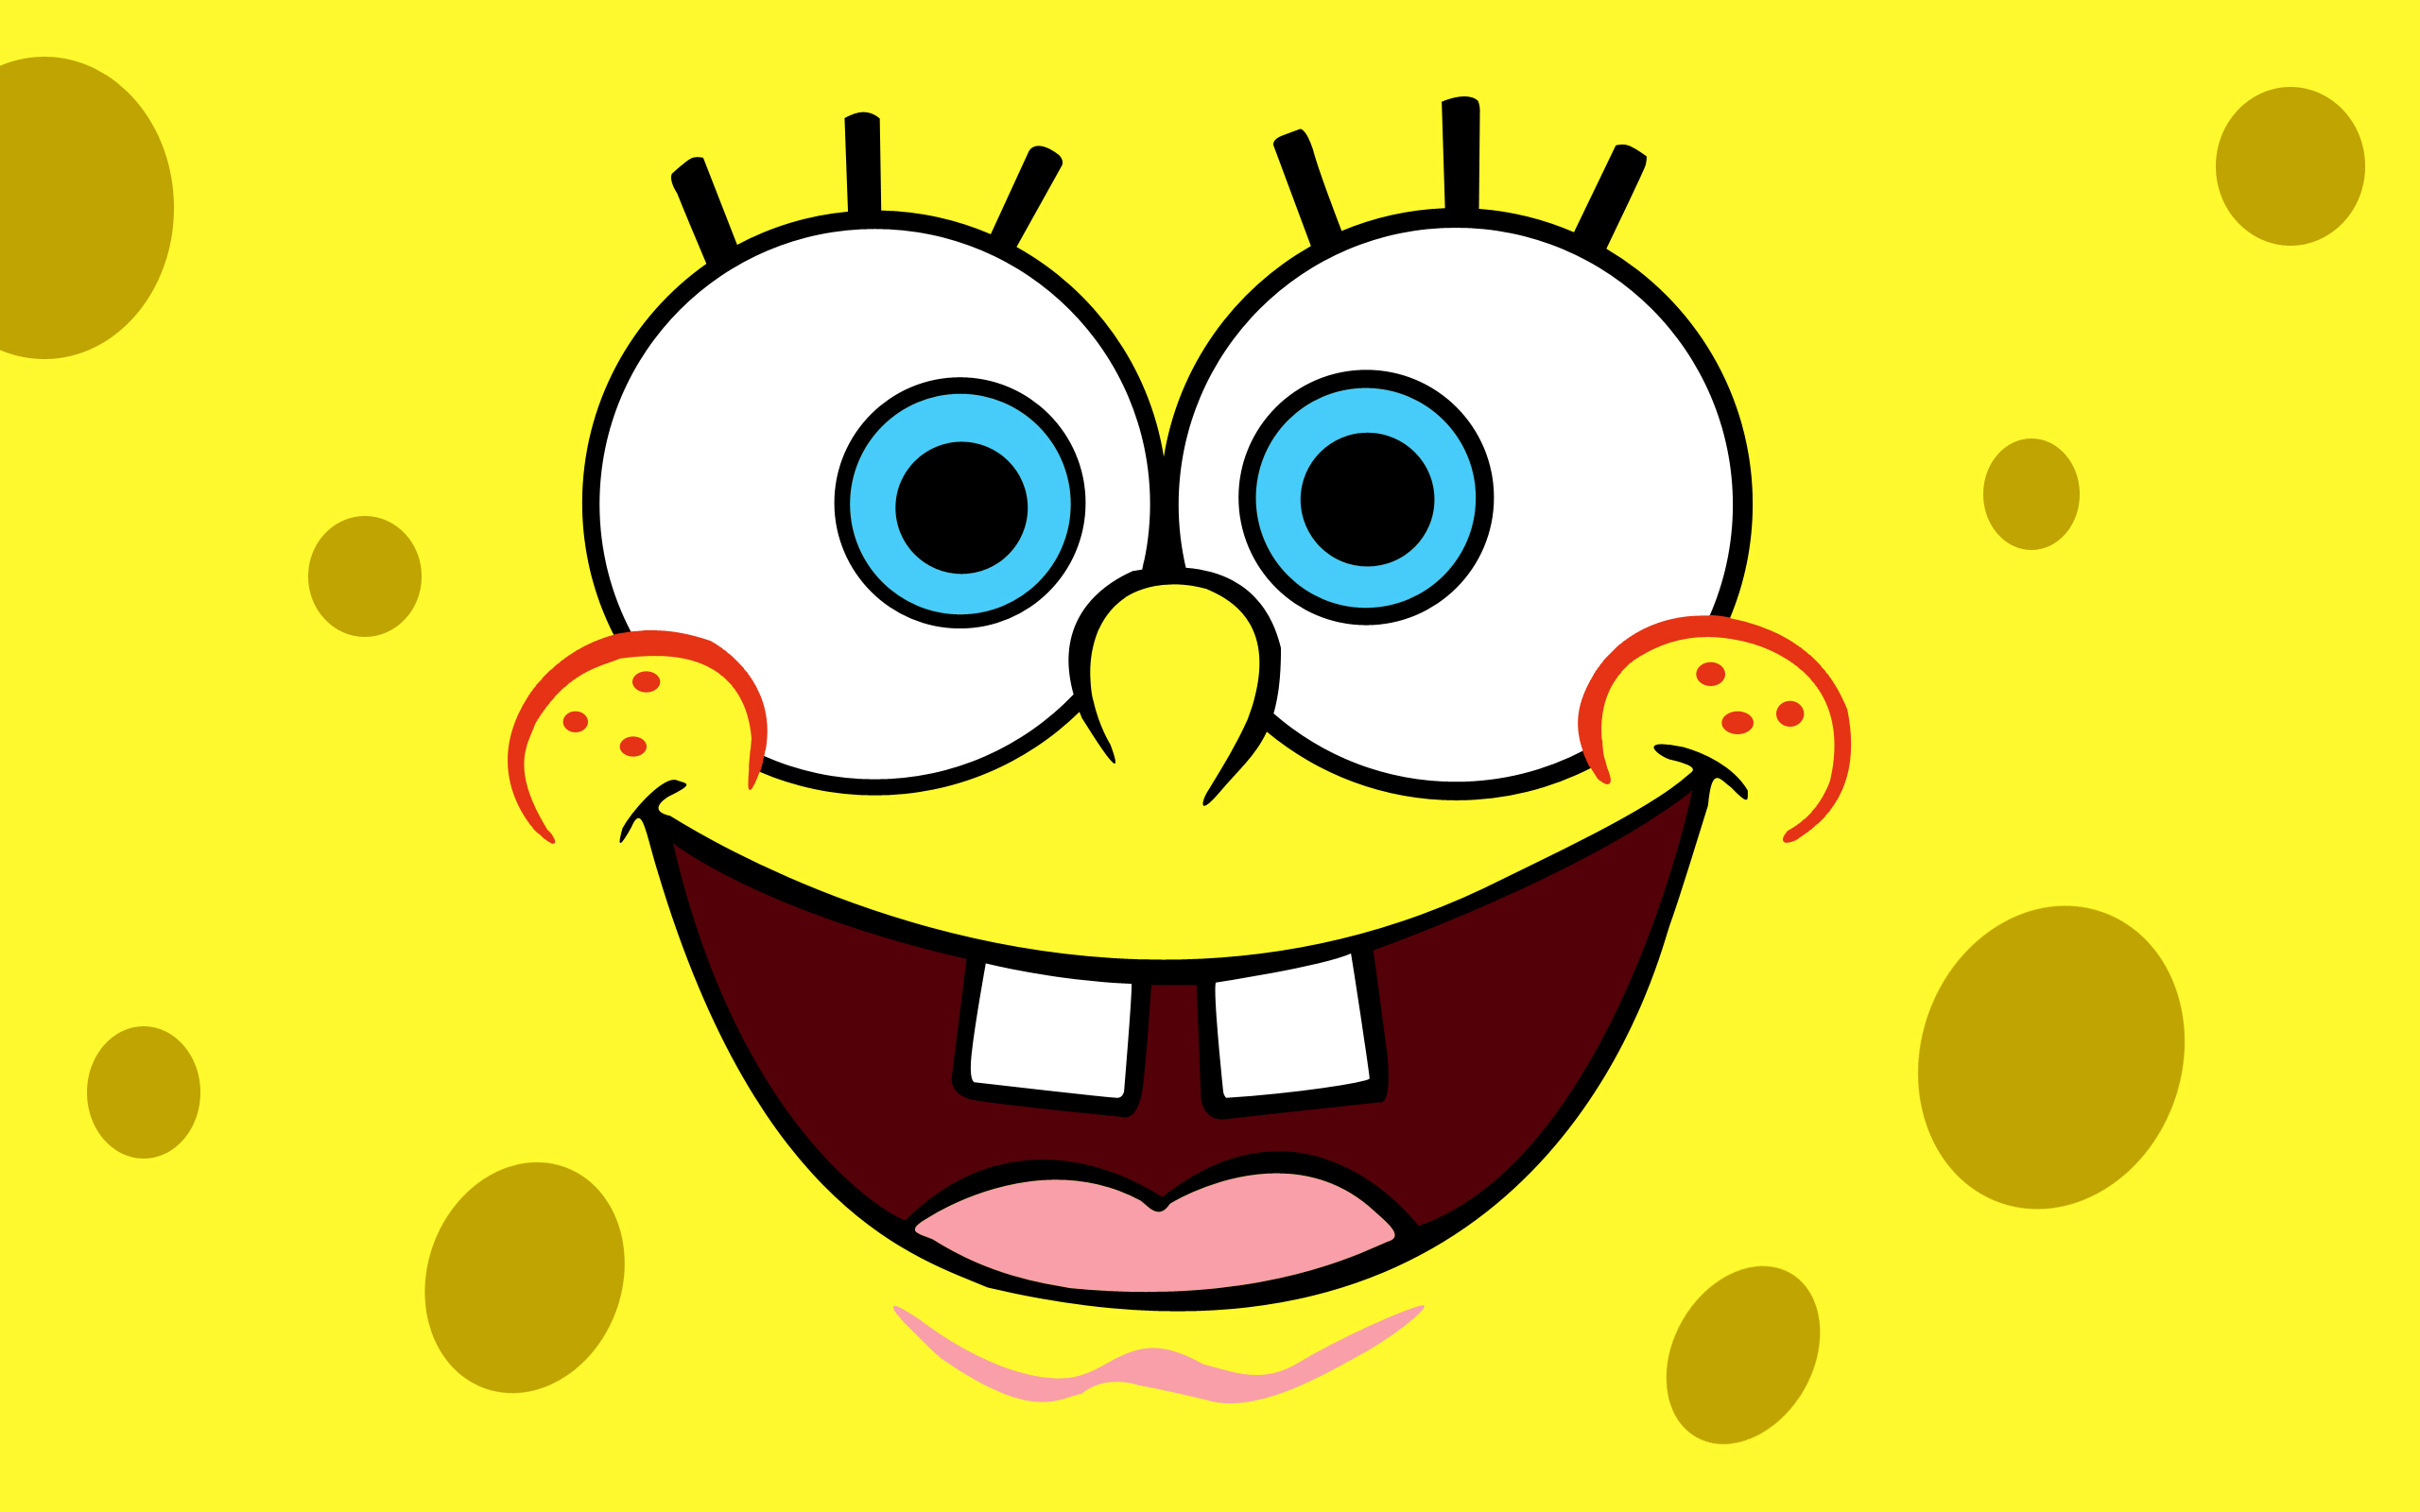 Spongebob images